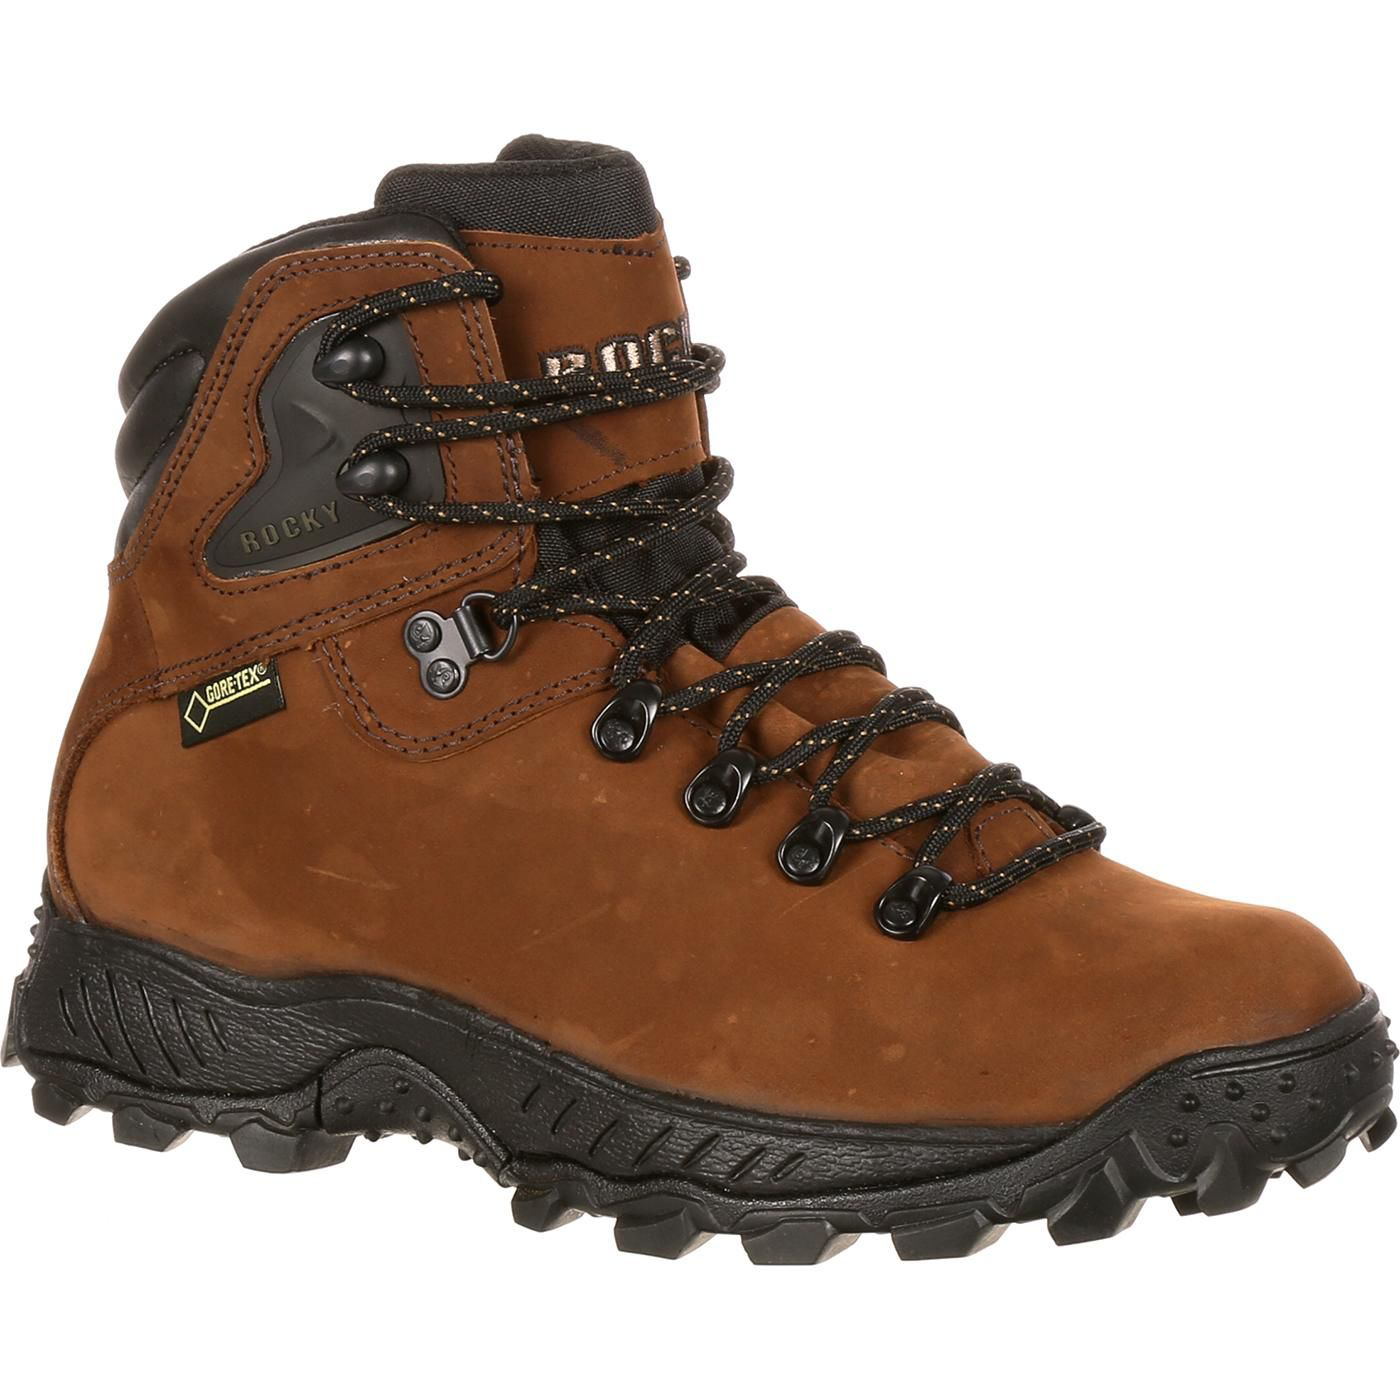 Rocky Ridgetop GORE-TEX 6"" Hiking Boots for Men - Brown - 10.5M